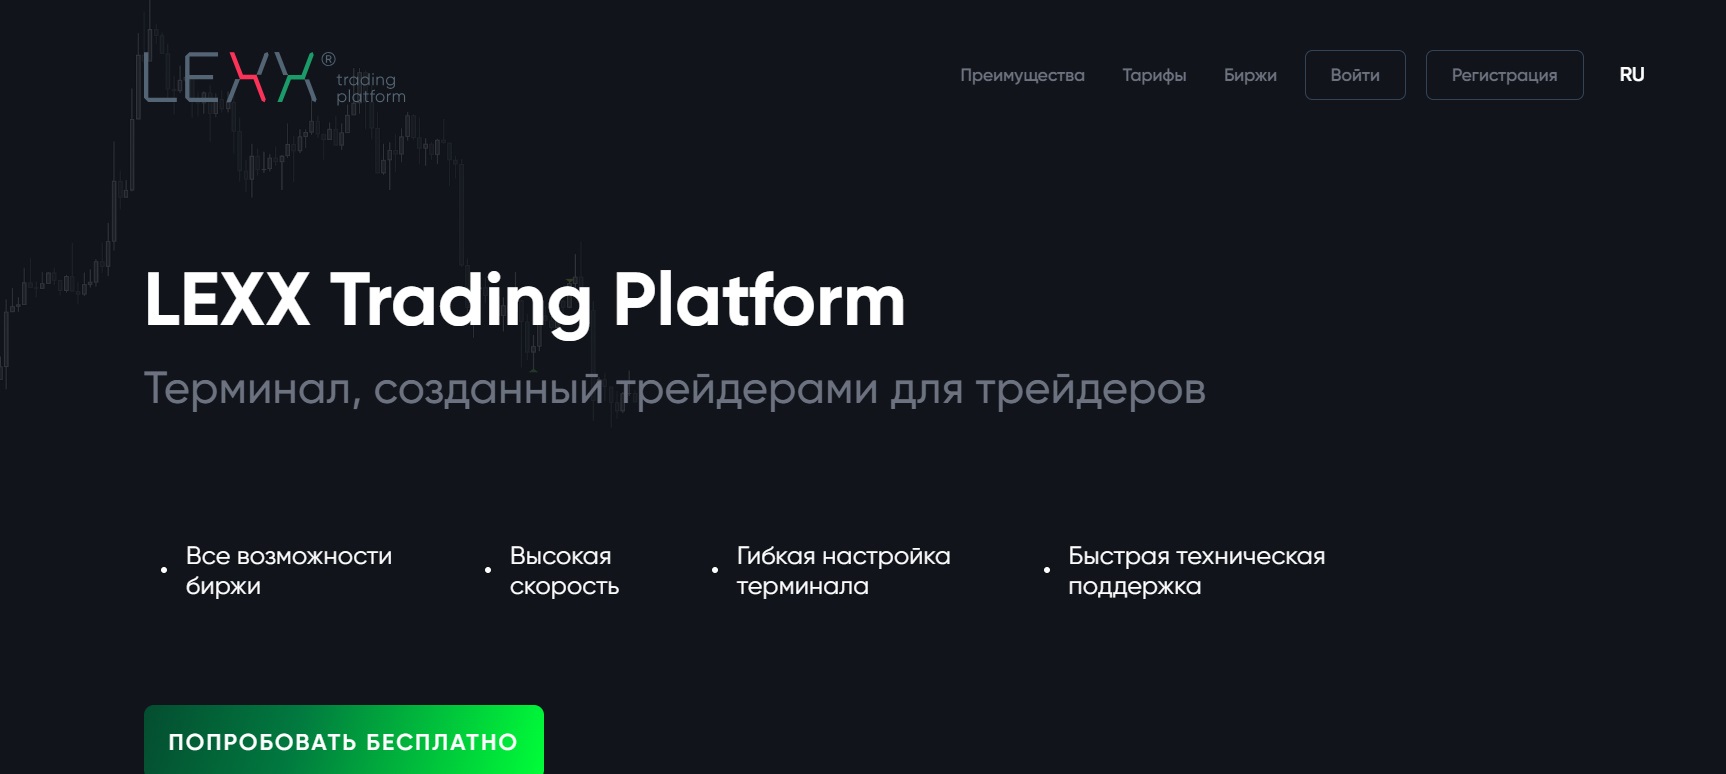 LEXX Trading Platform